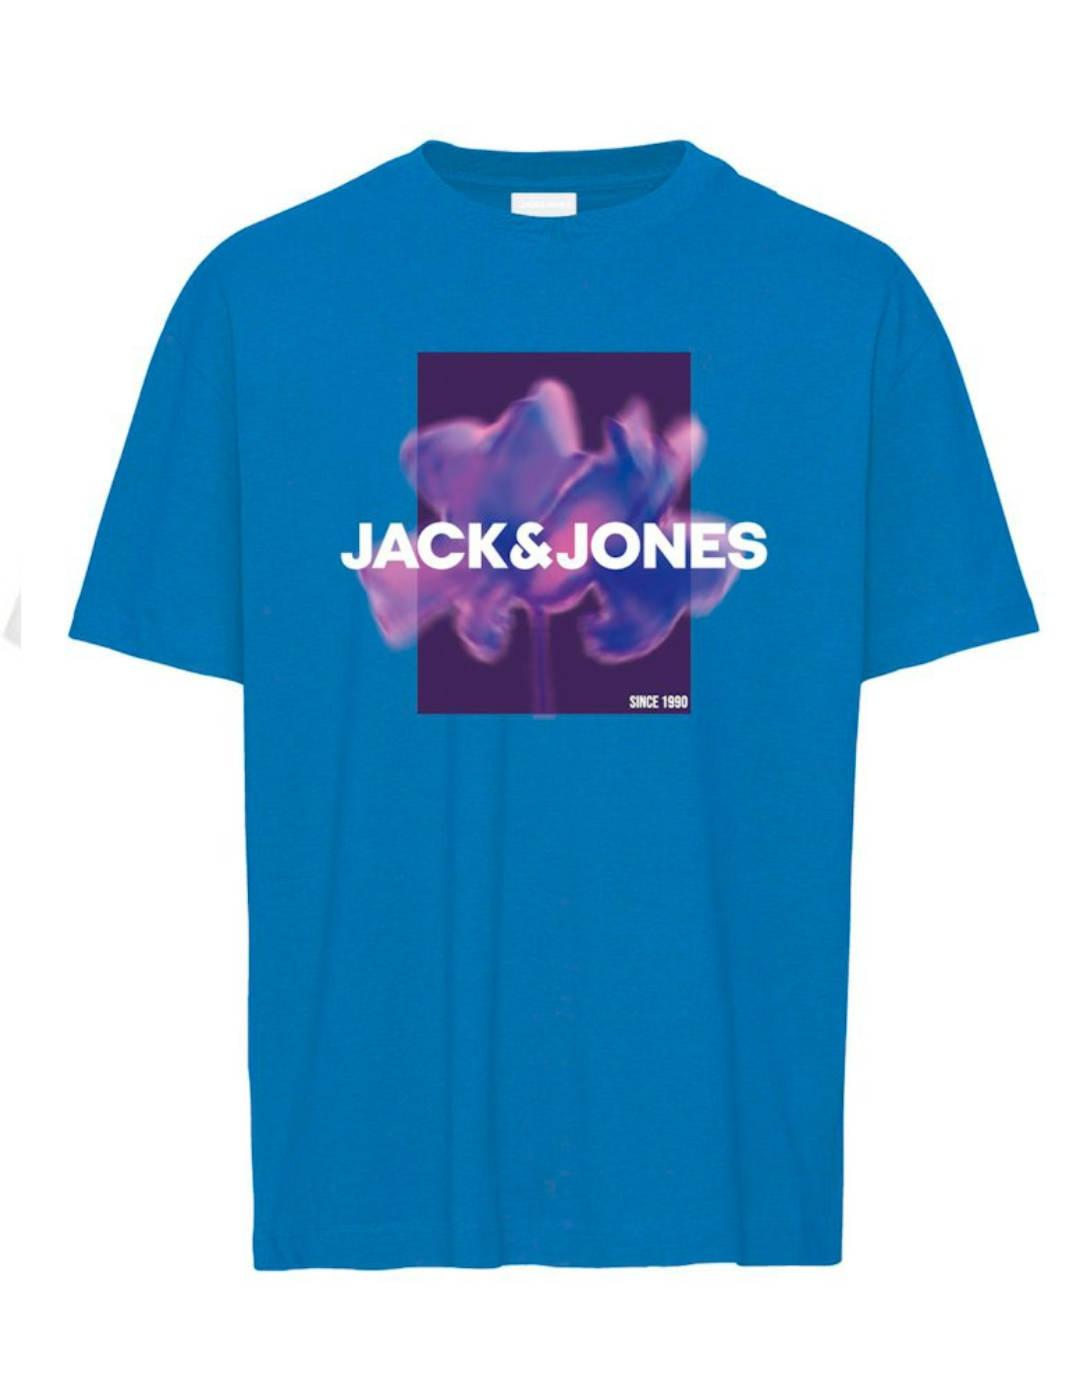 Camiseta Jack&Jones Florals azul manga corta para hombre